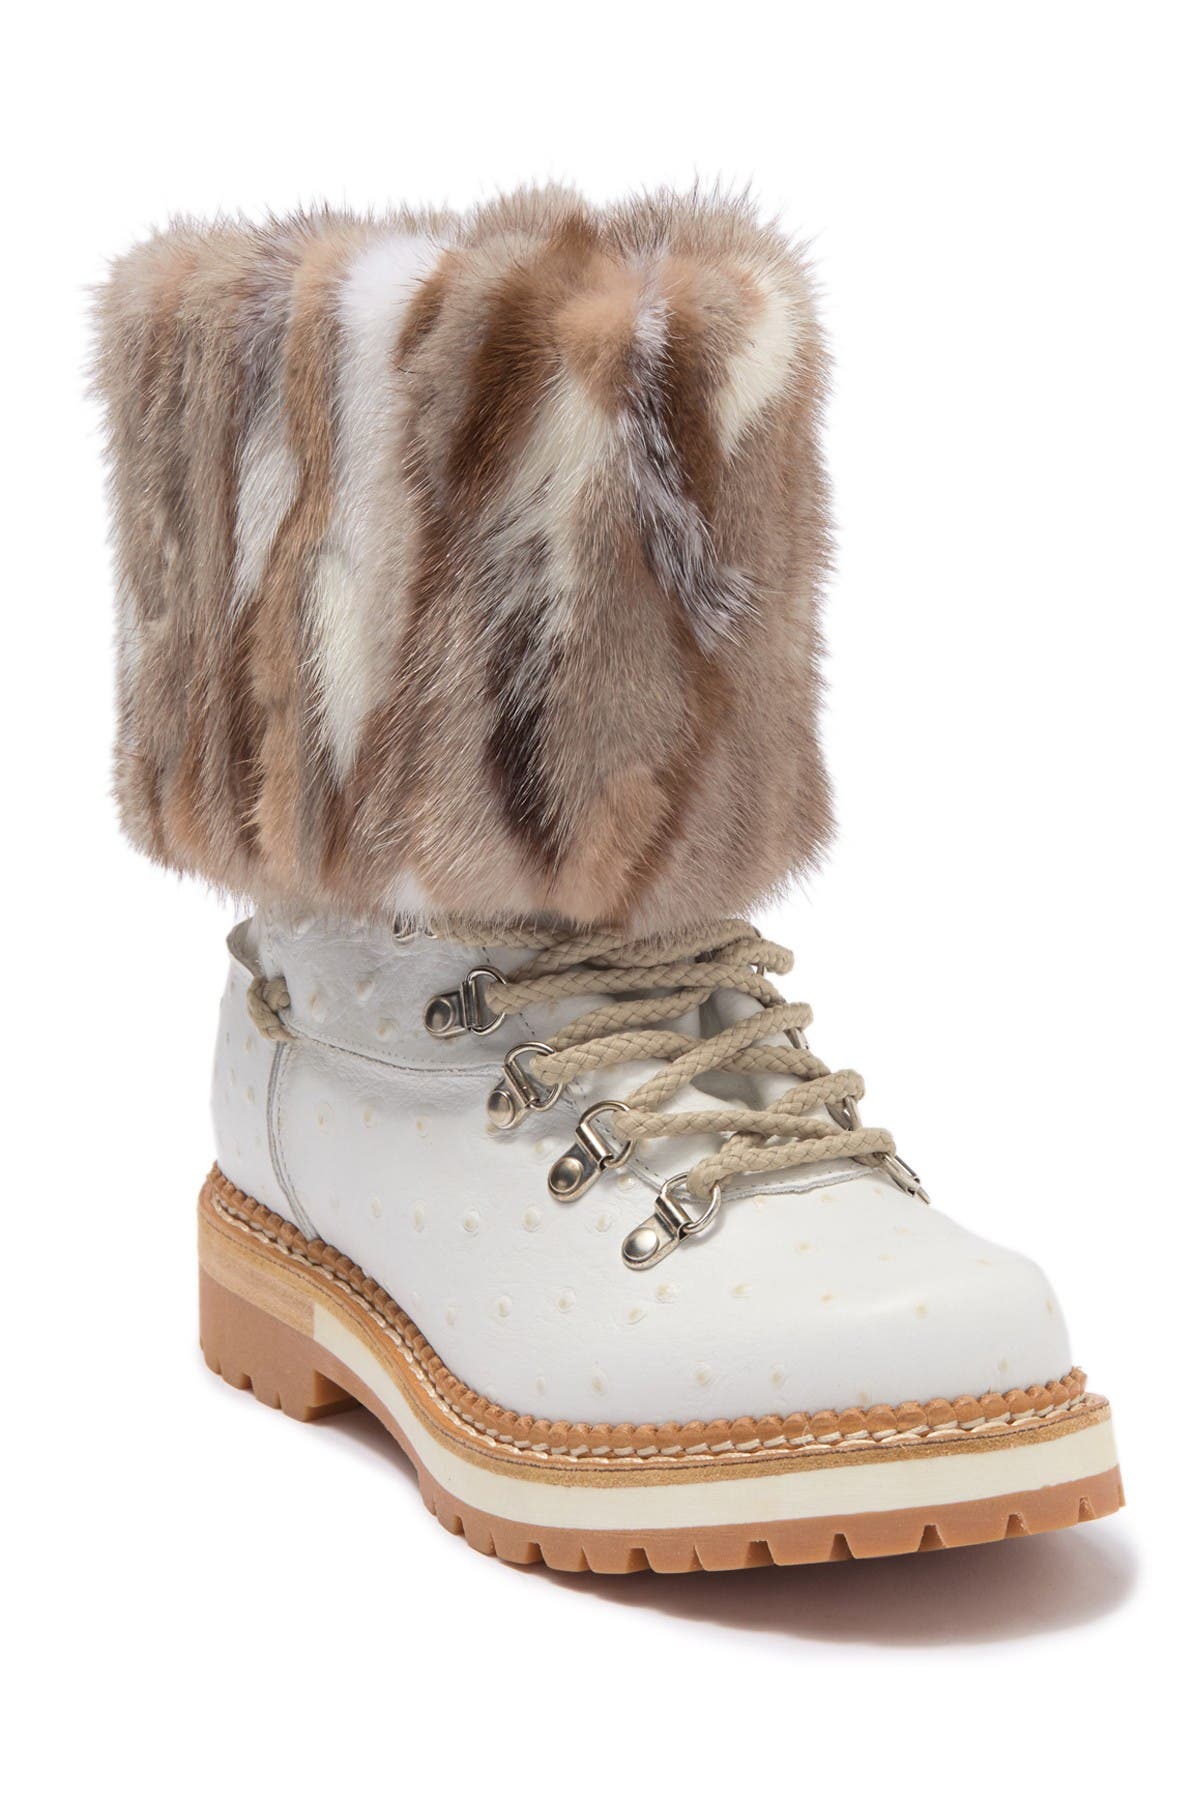 mink fur boots